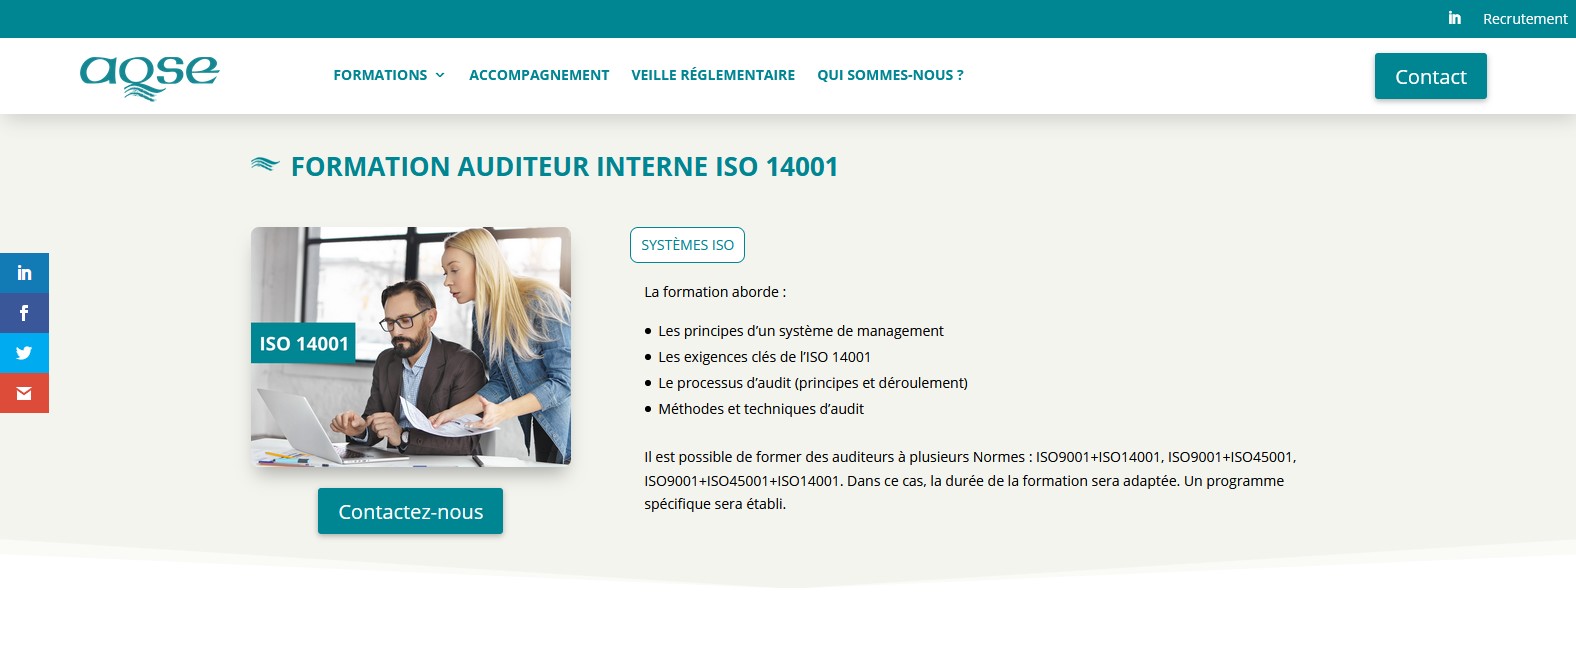 AQSE-France.fr Formation auditeur interne ISO 14001 auditeur environnement